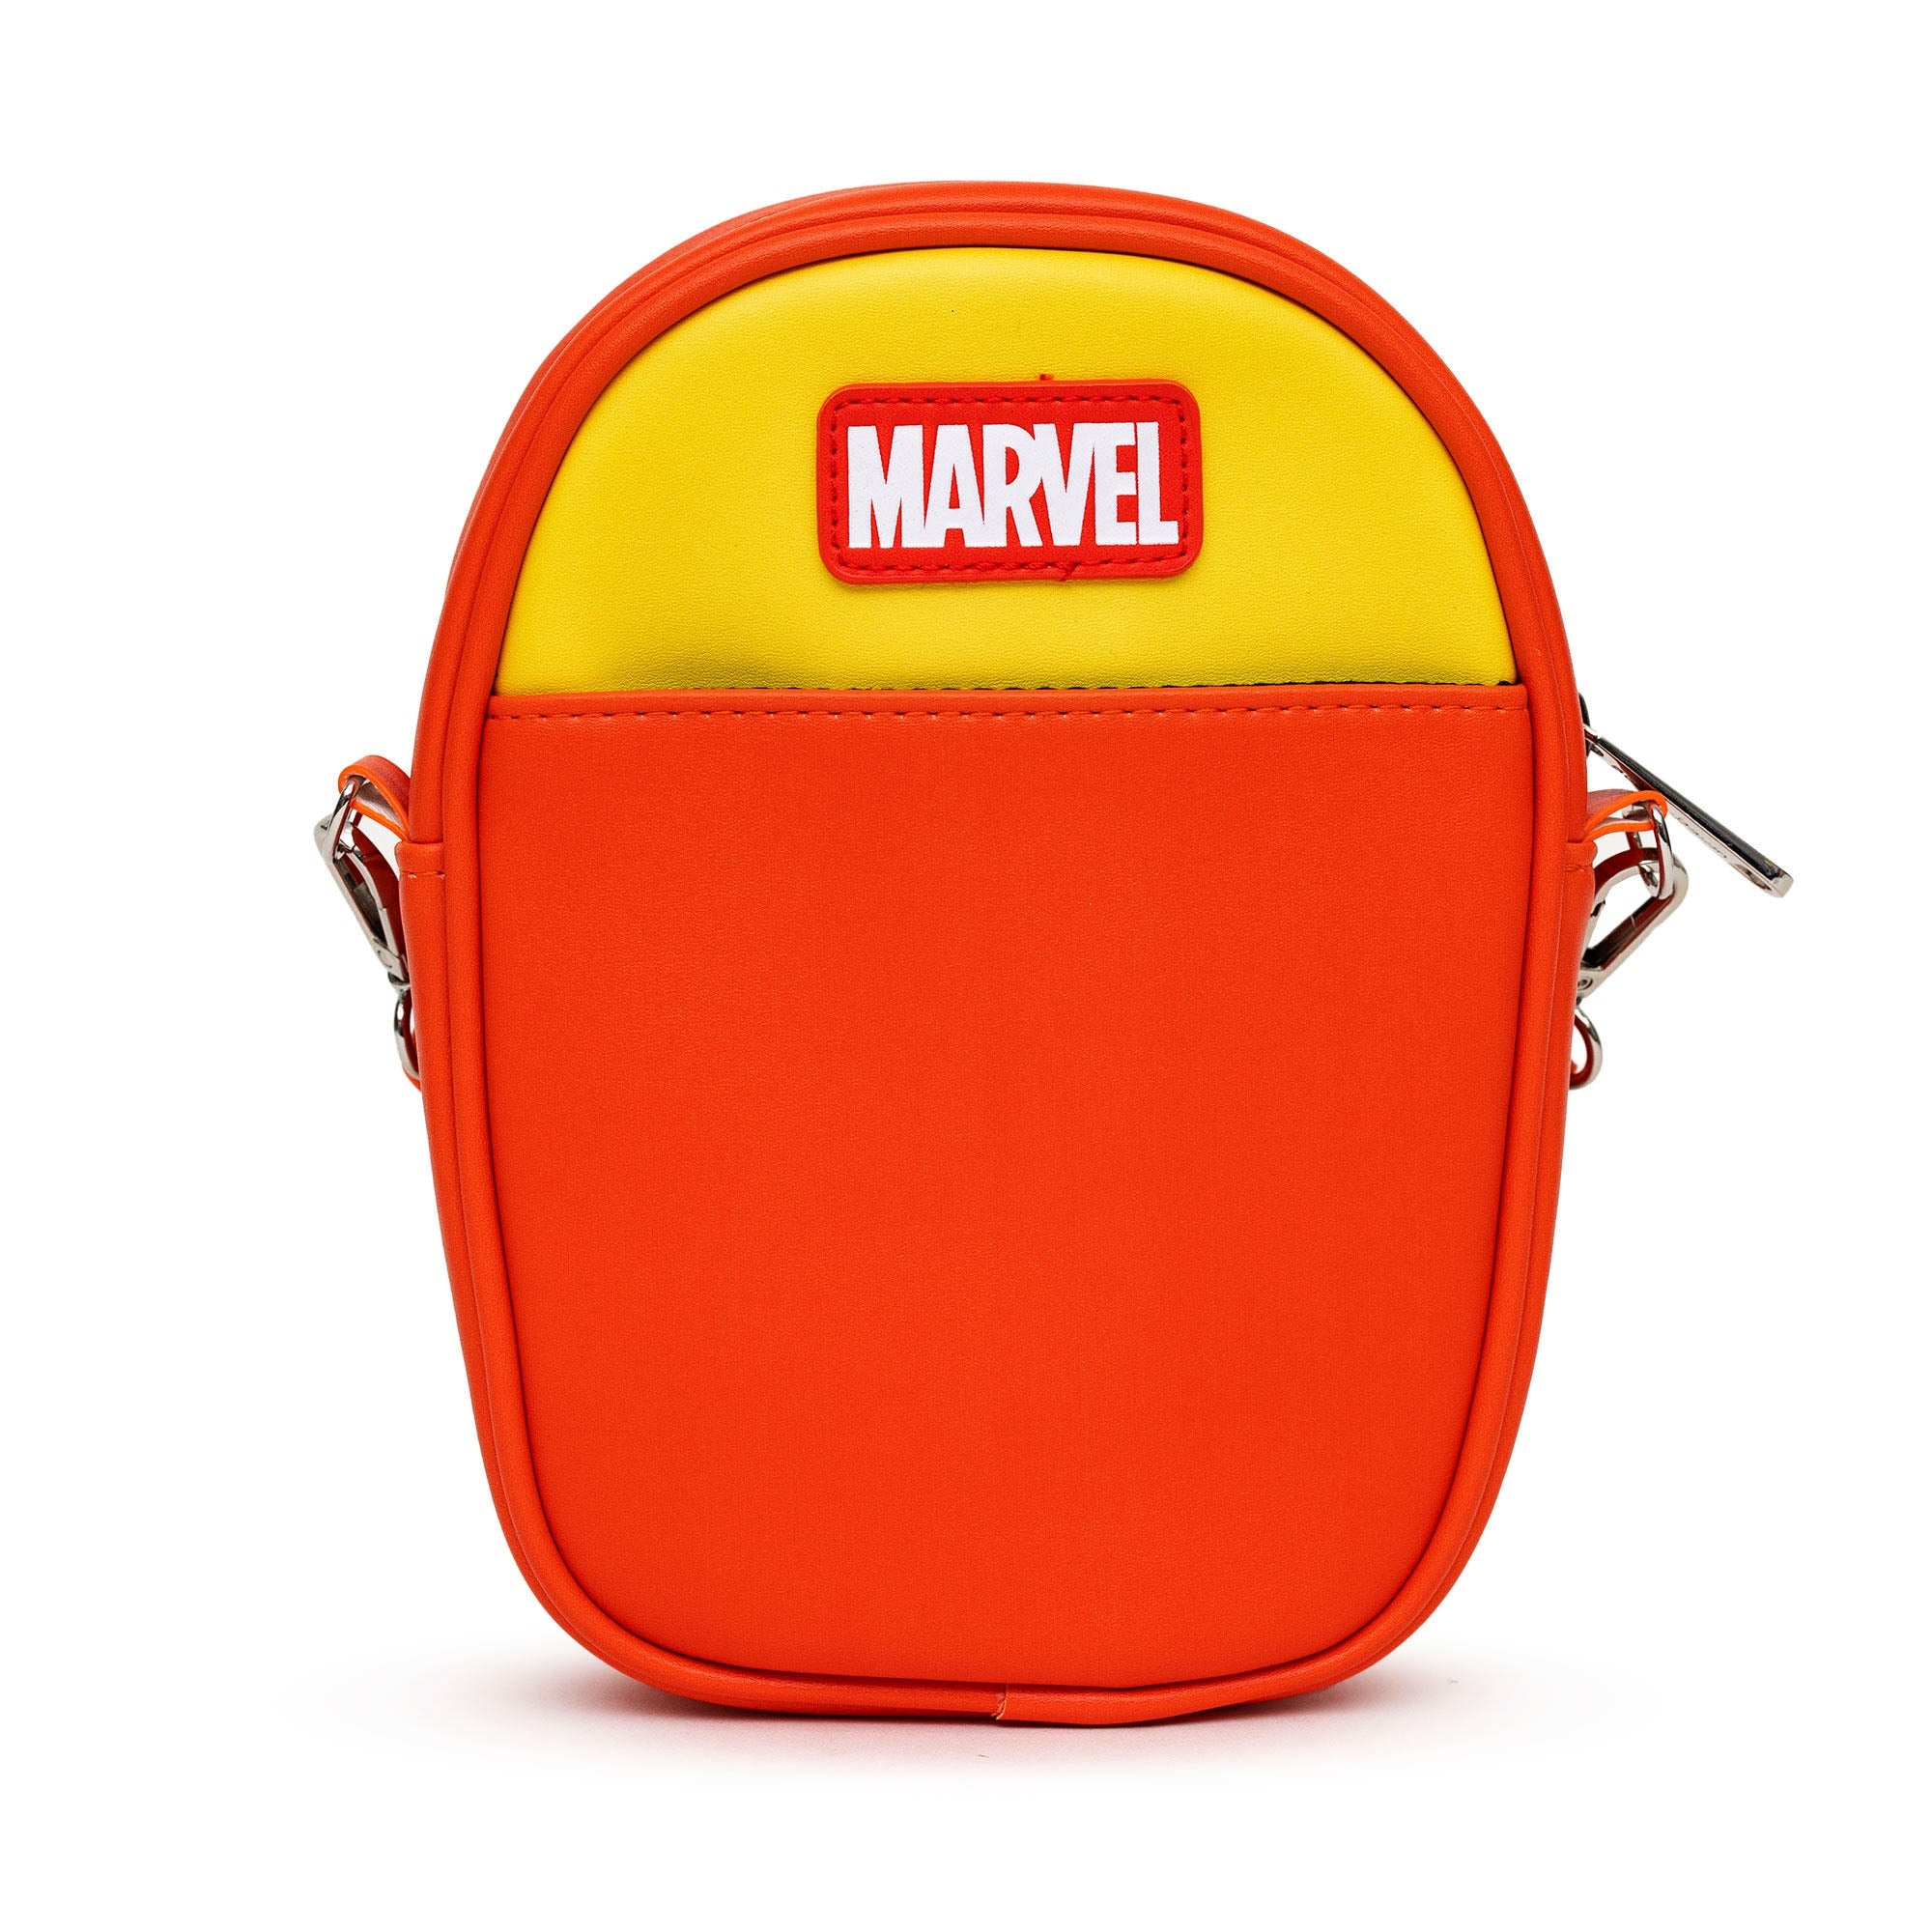 Marvel comic tote bag - Gem